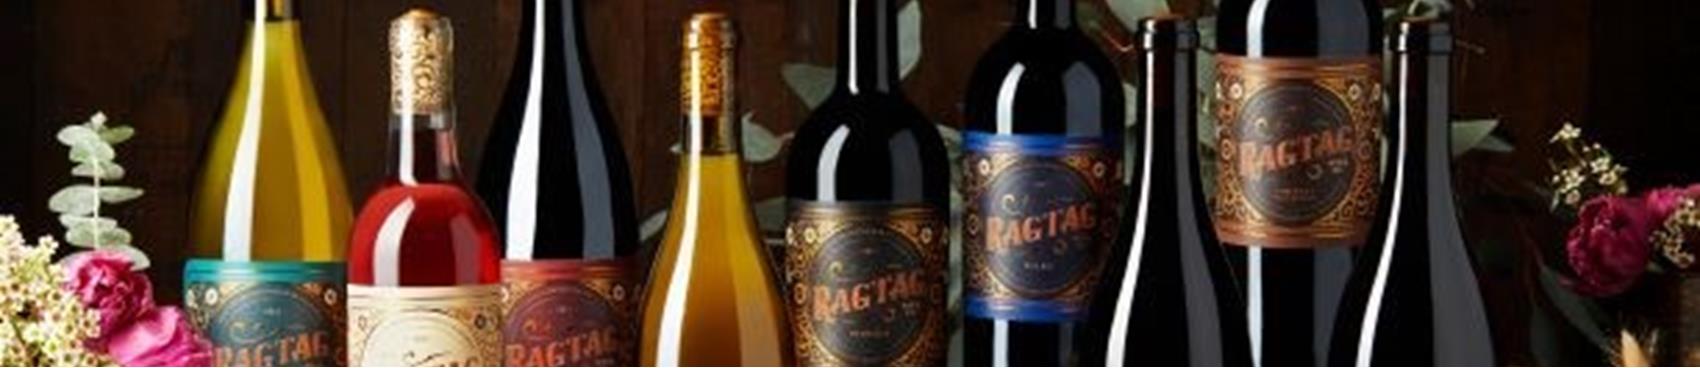 Ragtag Wine Co.